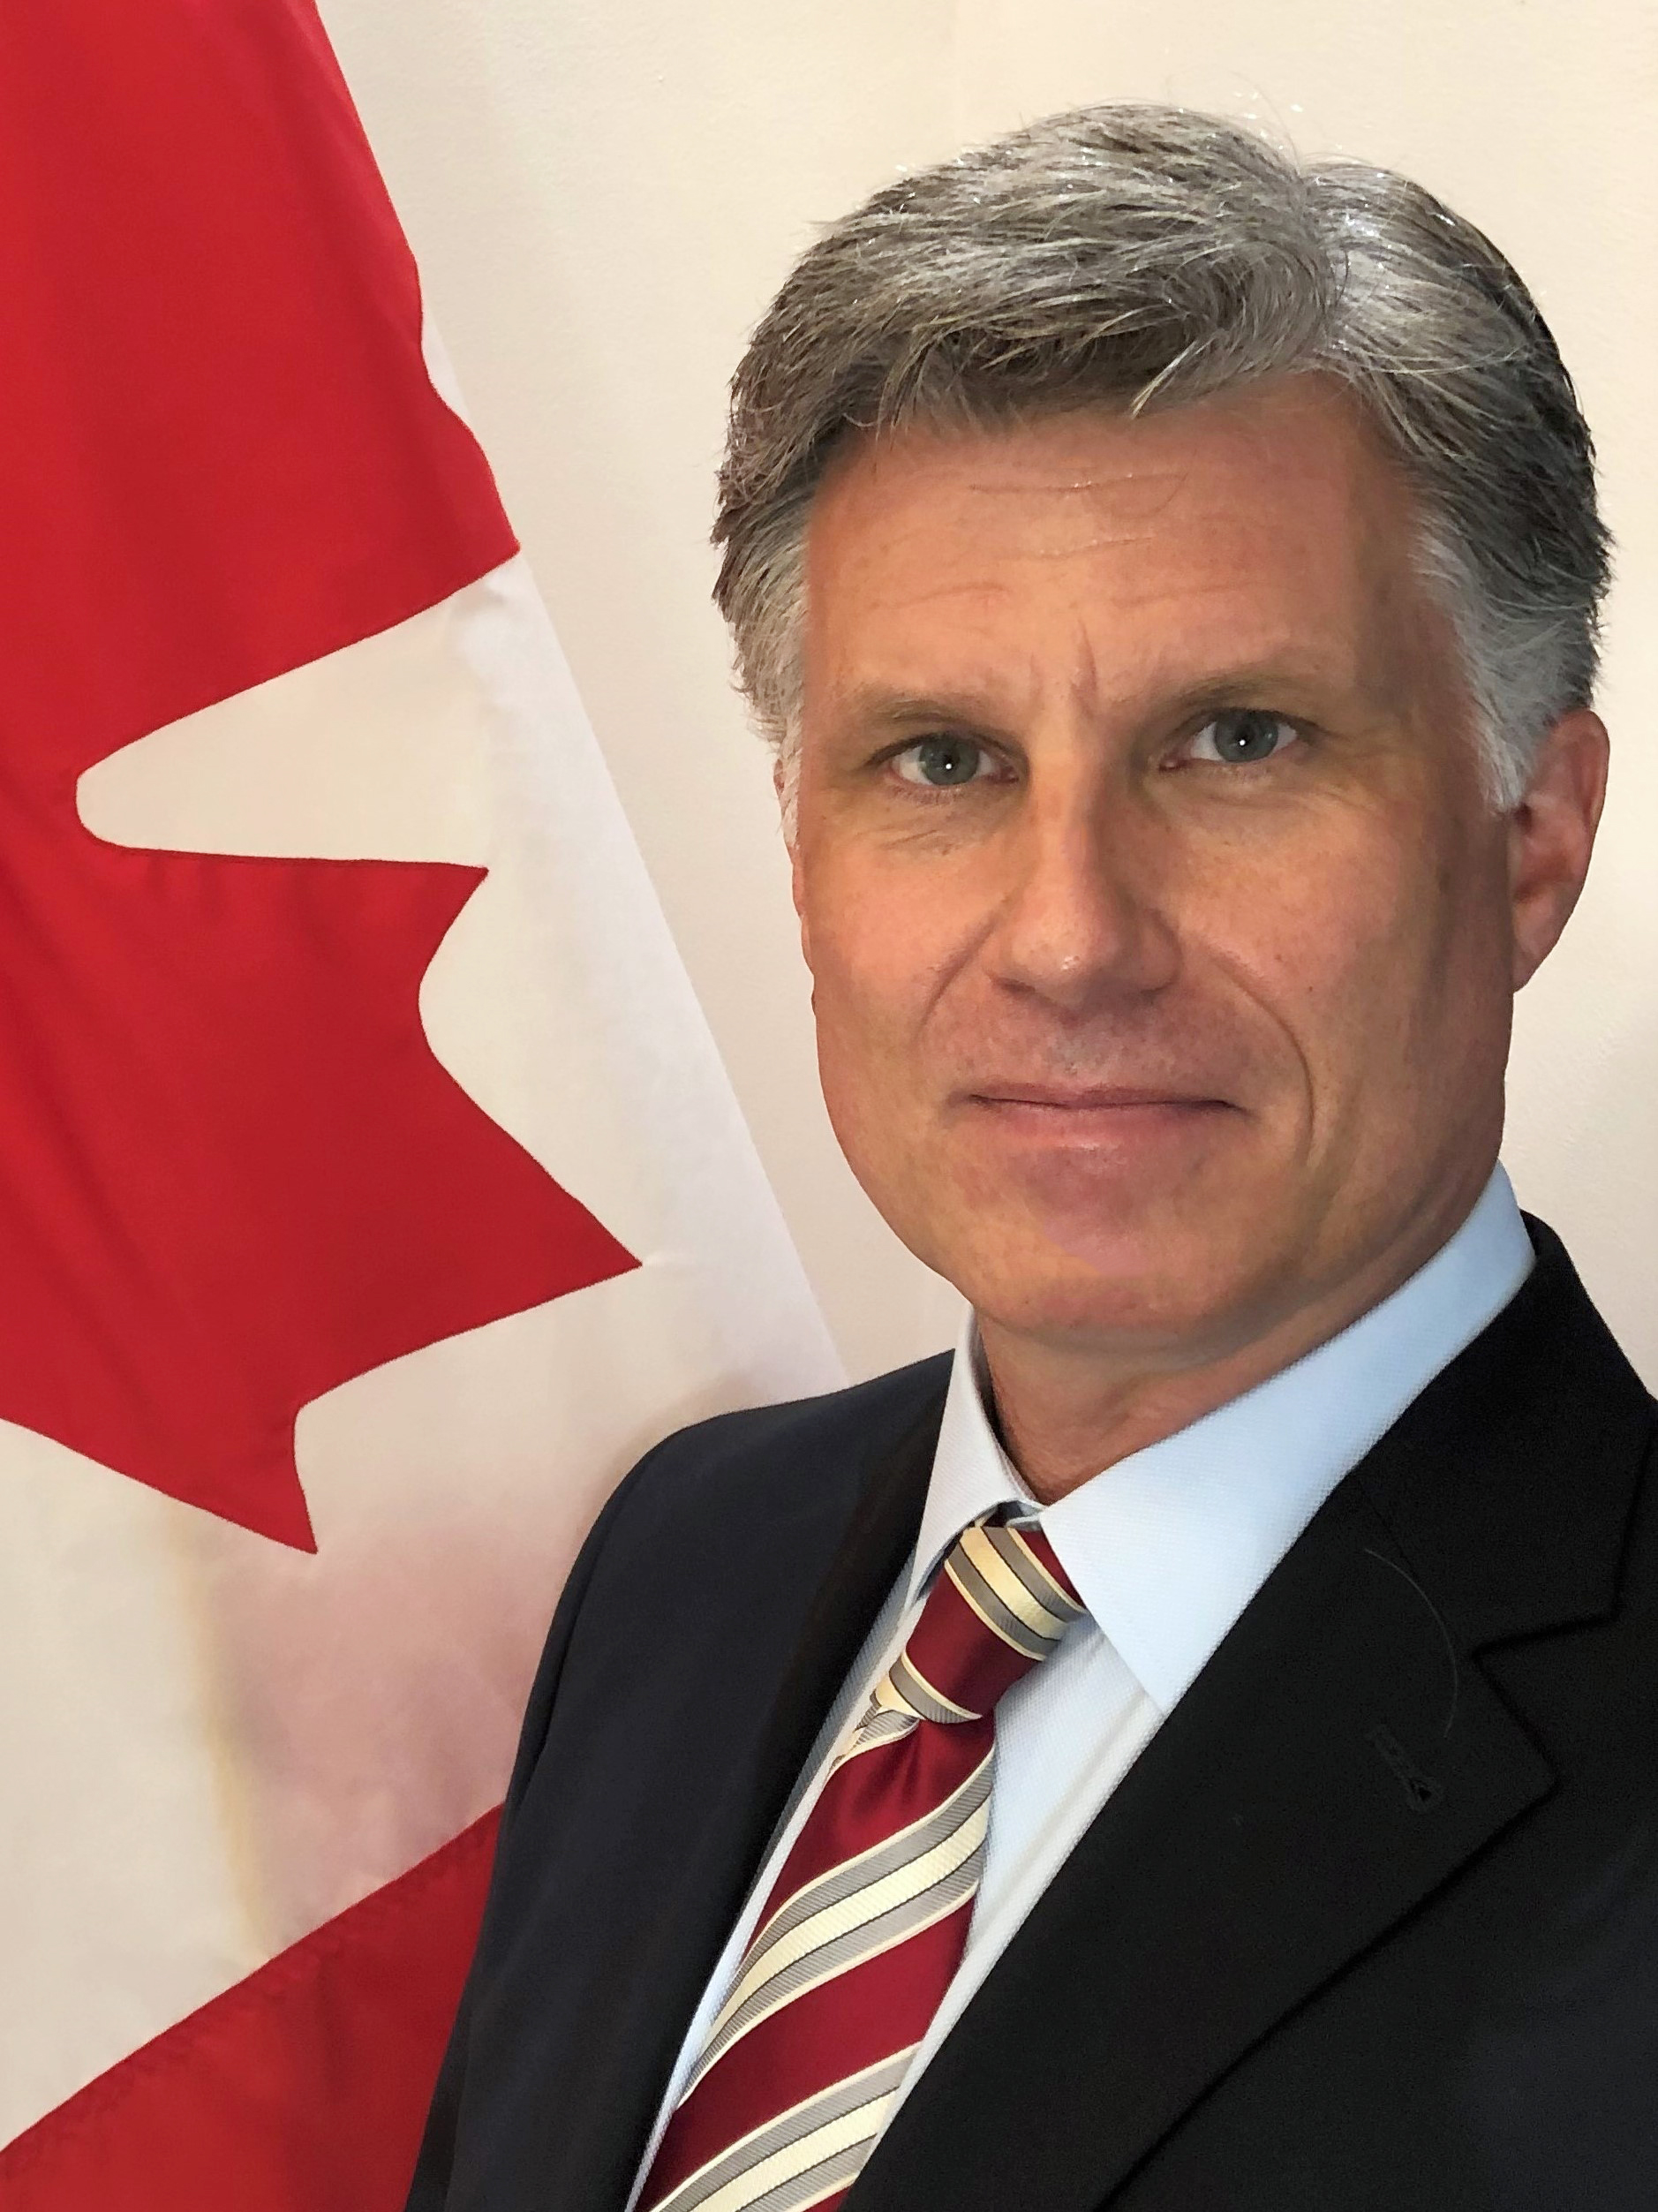 Cameron MacKay, Ambassador of Canada to Indonesia and Timor-Leste